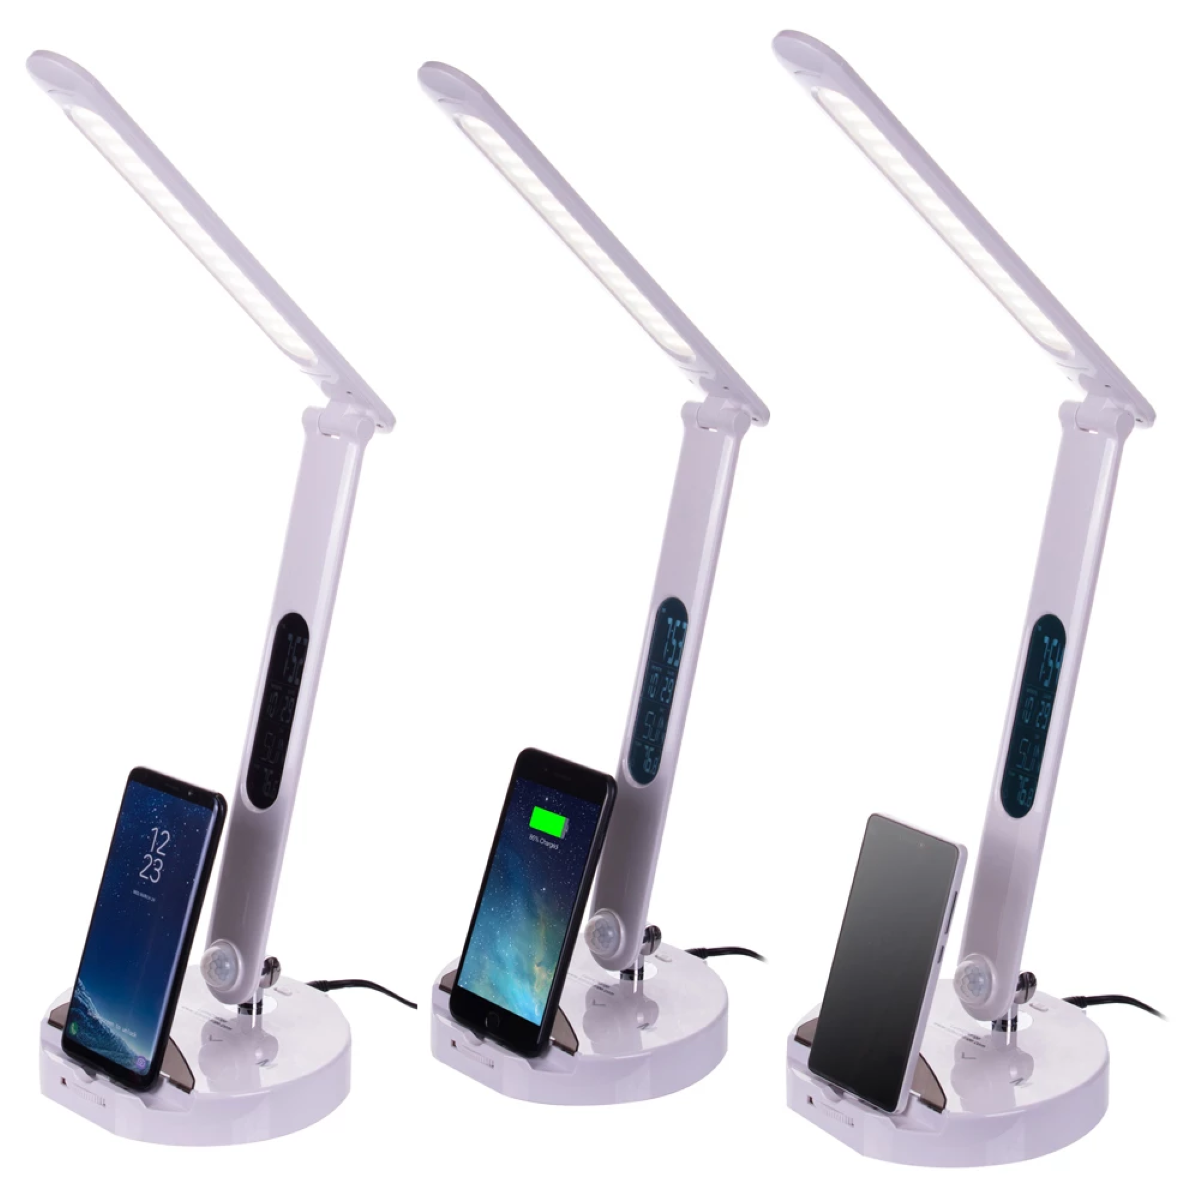 LED Lamp and Universal Phone Dock - Smartphone Charging Dock (2)